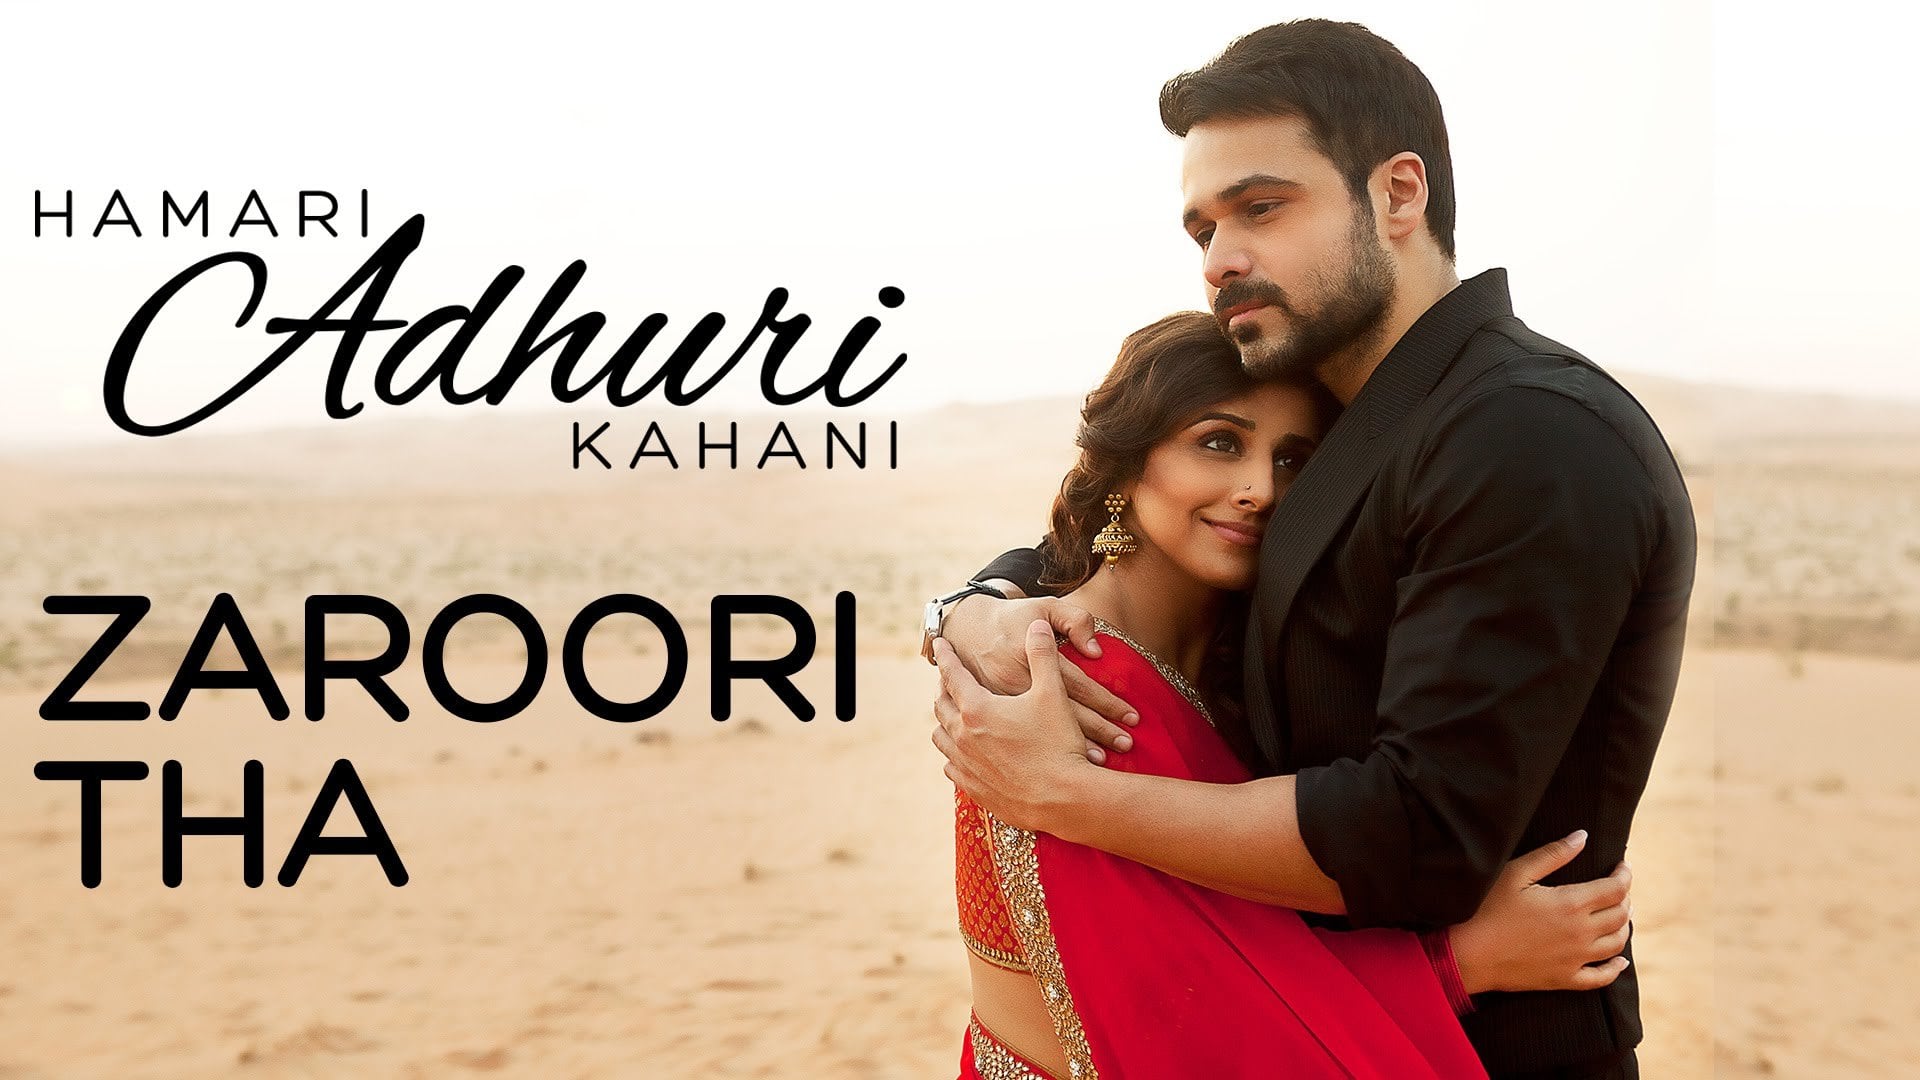 Kahaani Full Movie In Hindi Hd Download Free Torrent